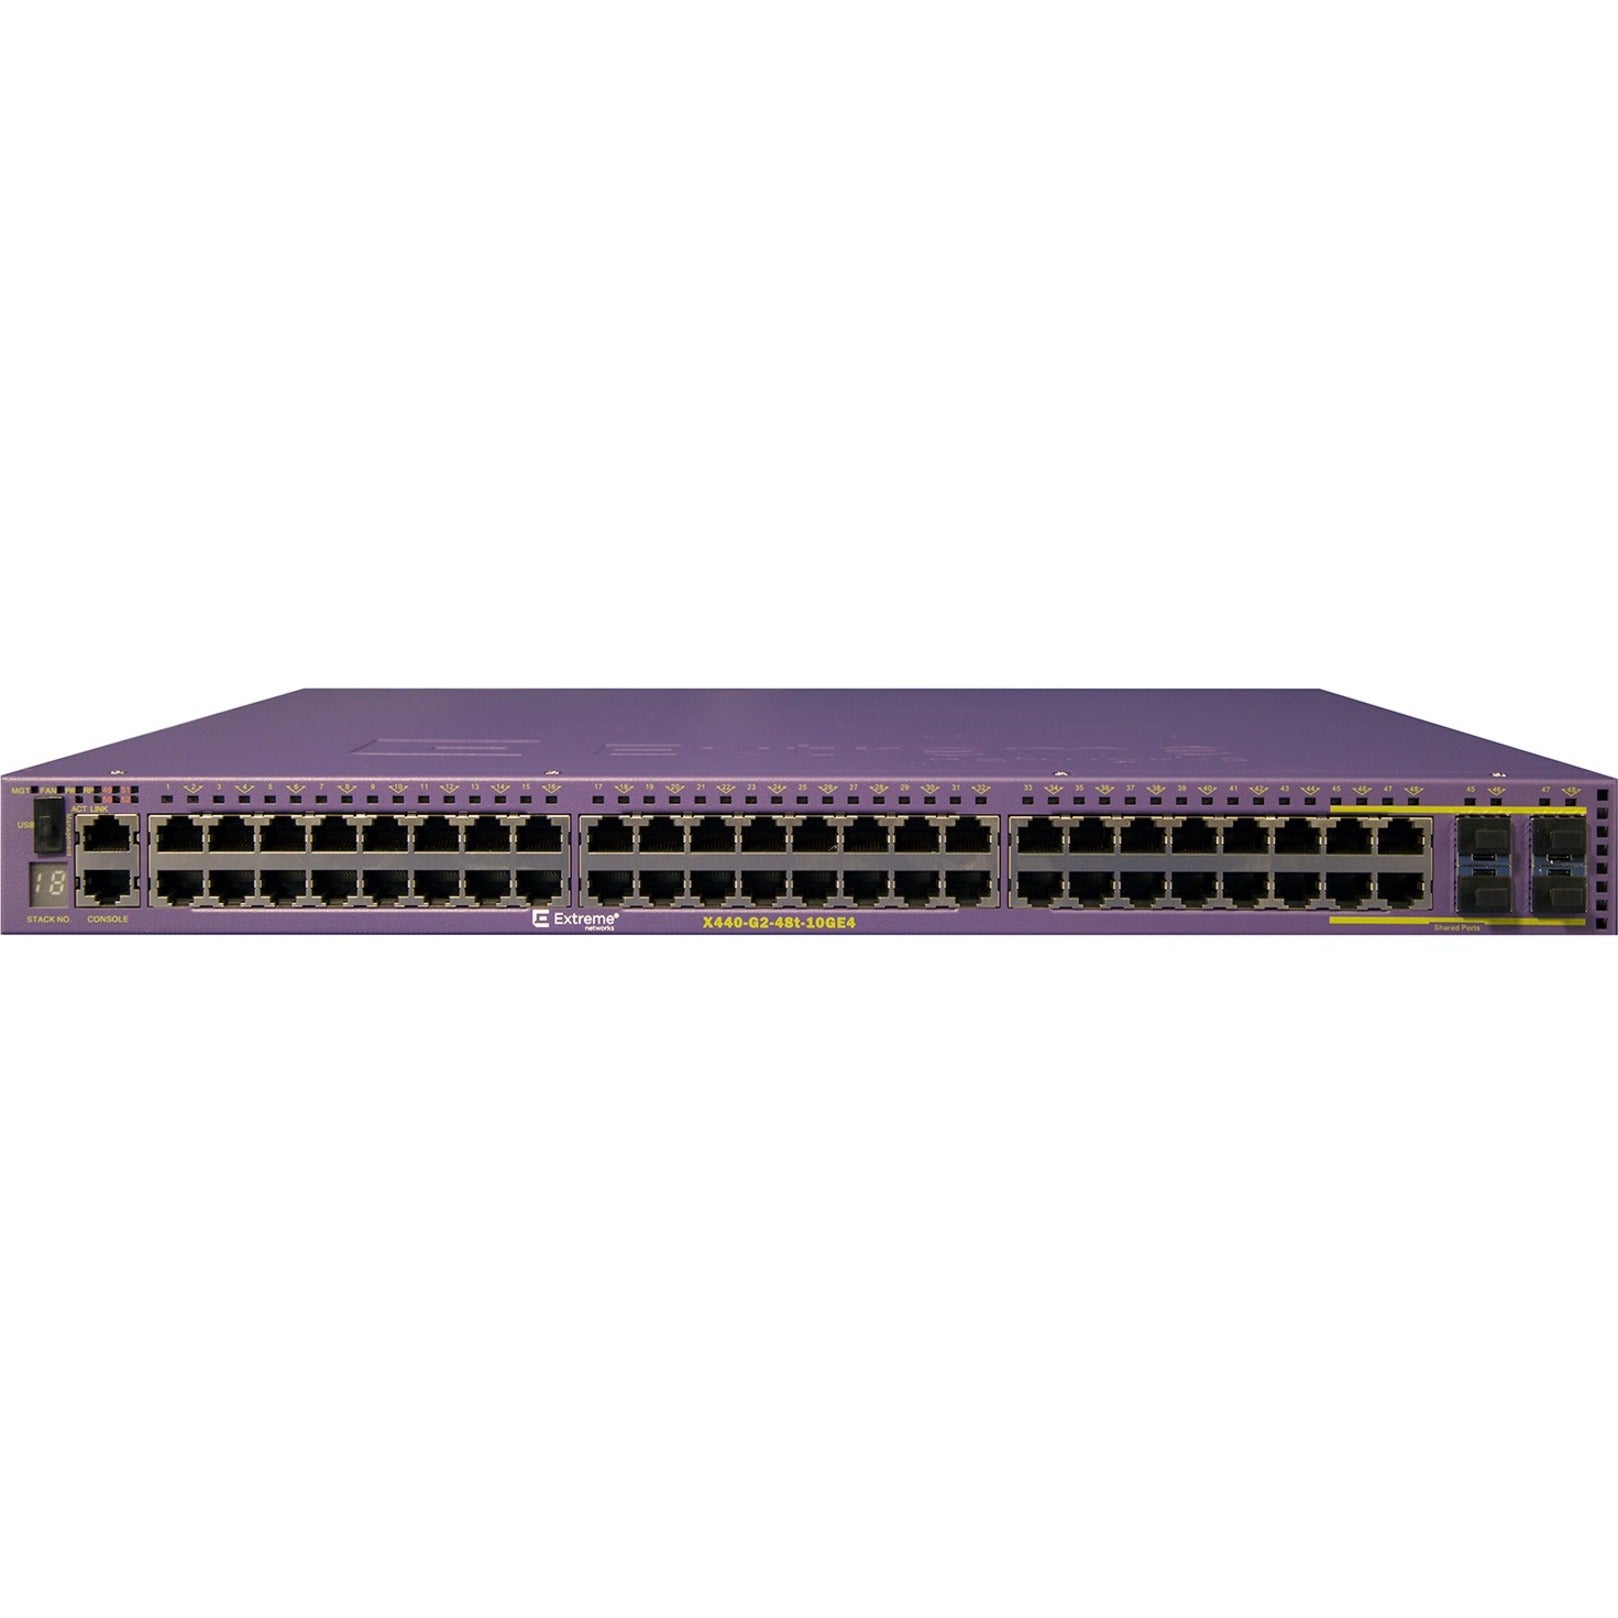 Extreme Networks 16534 X440-G2-48t-10GE4 Bộ Chuyển Mạch Ethernet Gigabit Ethernet 48 Cổng Mạng